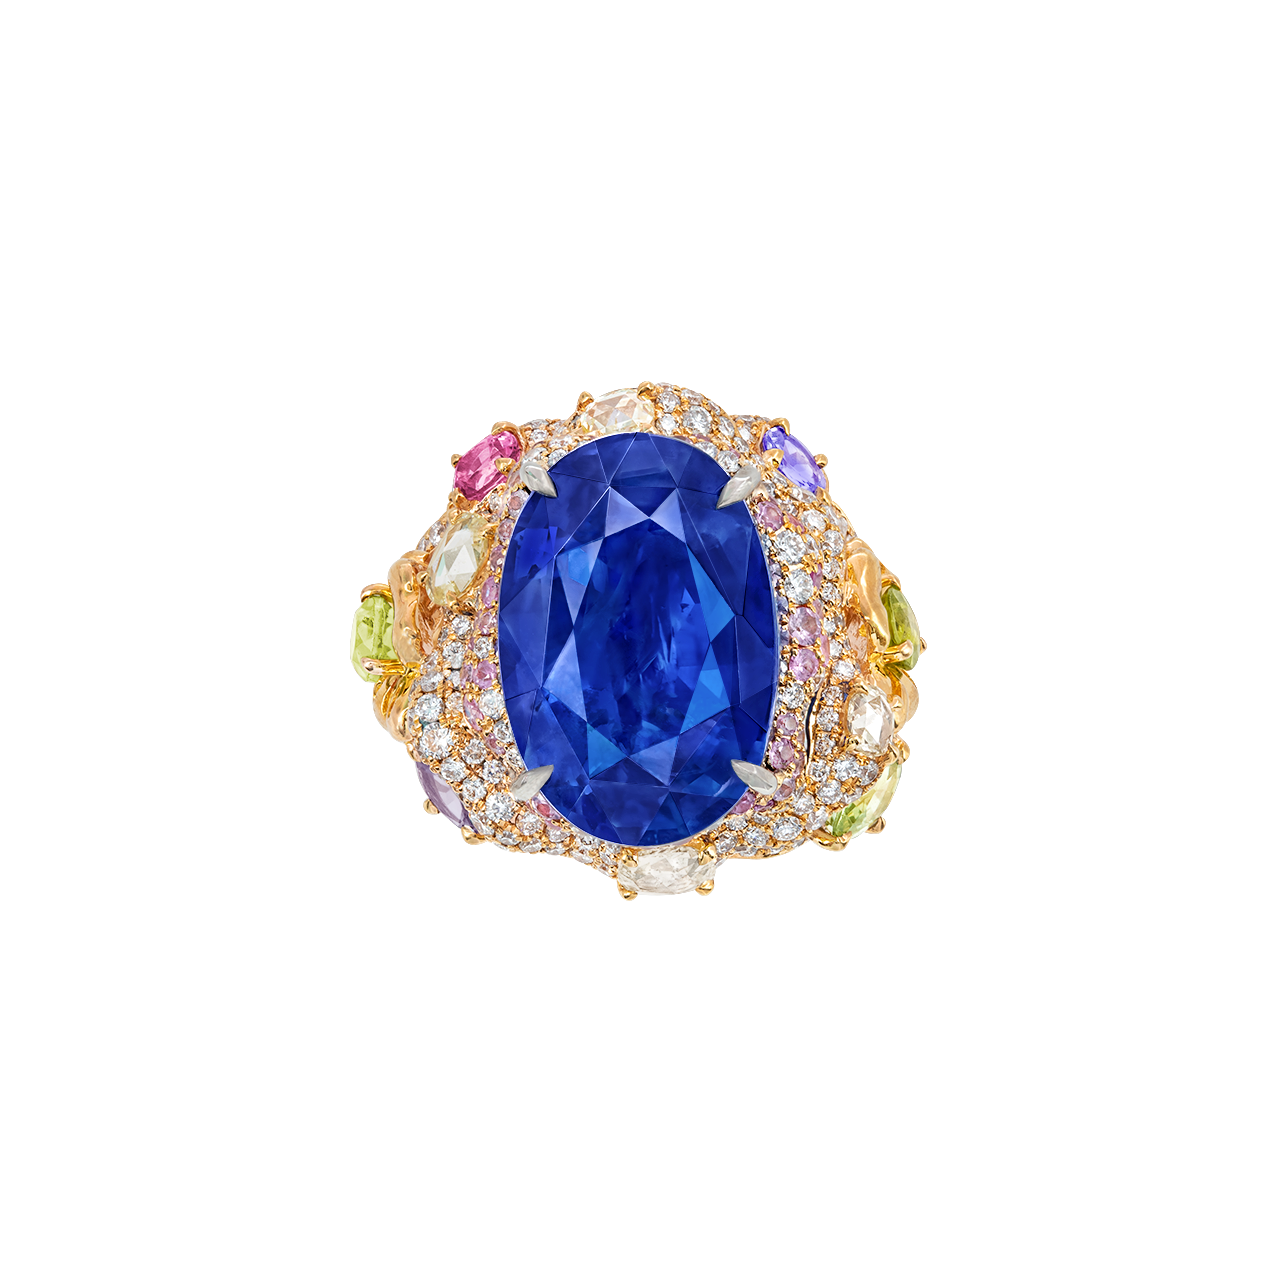 20.04克拉 斯里蘭卡天然無燒皇家藍藍寶鑽戒
SRI LANKA ROYAL BLUE SAPPHIRE 
AND DIAMOND RING